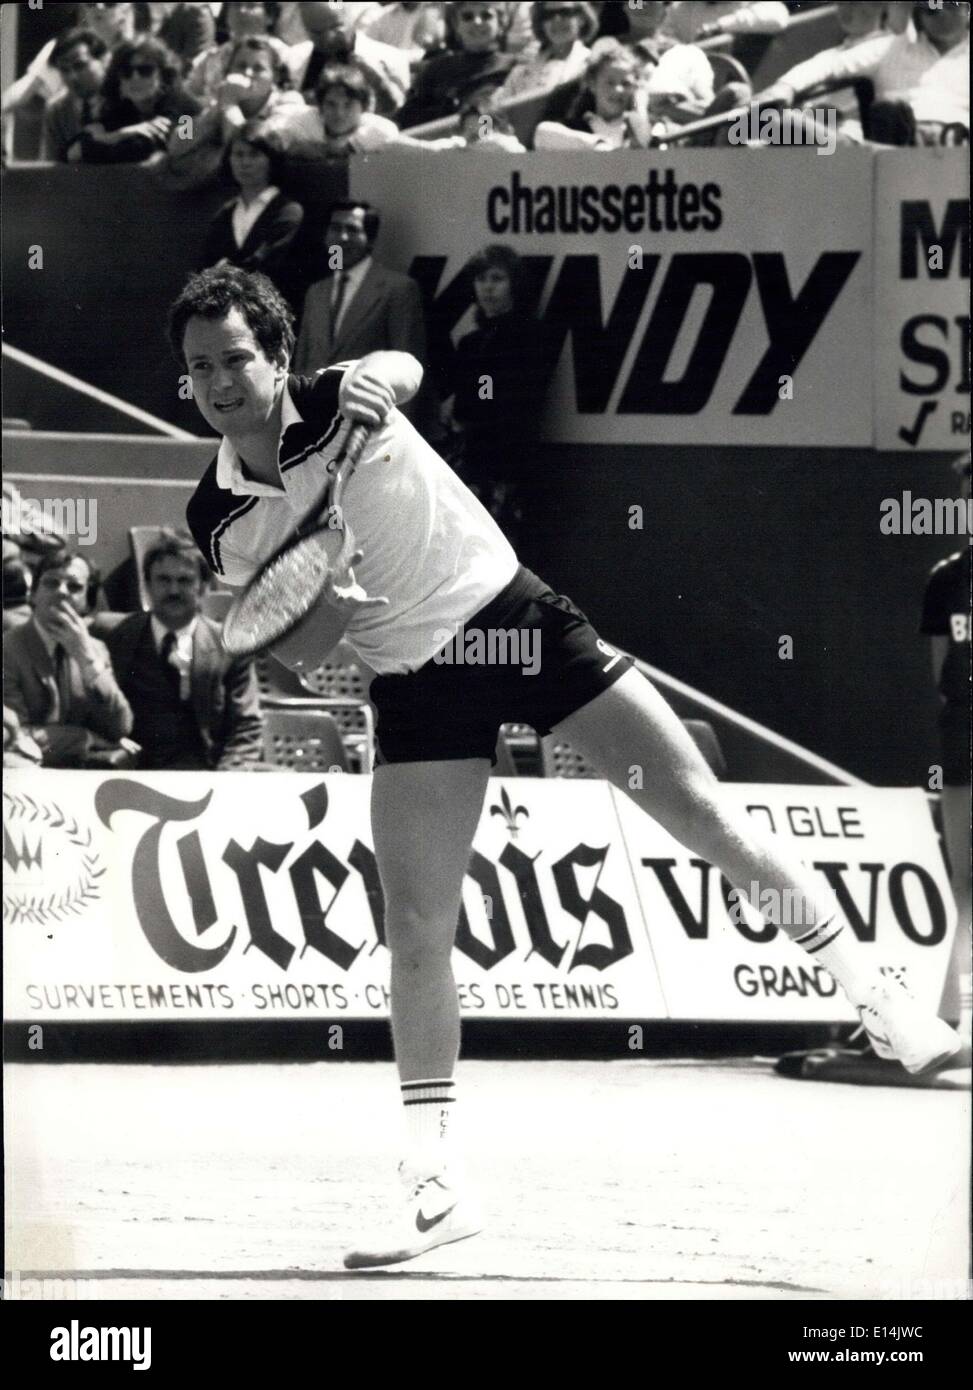 Apr. 05, 2012 - Tennis French Open 1984 : Photo shows the American Teenisman, John Mc Enroe, playing at Roalnd Garros stadium, he won the Argentinian De La Pena in 3 sets. Stock Photo